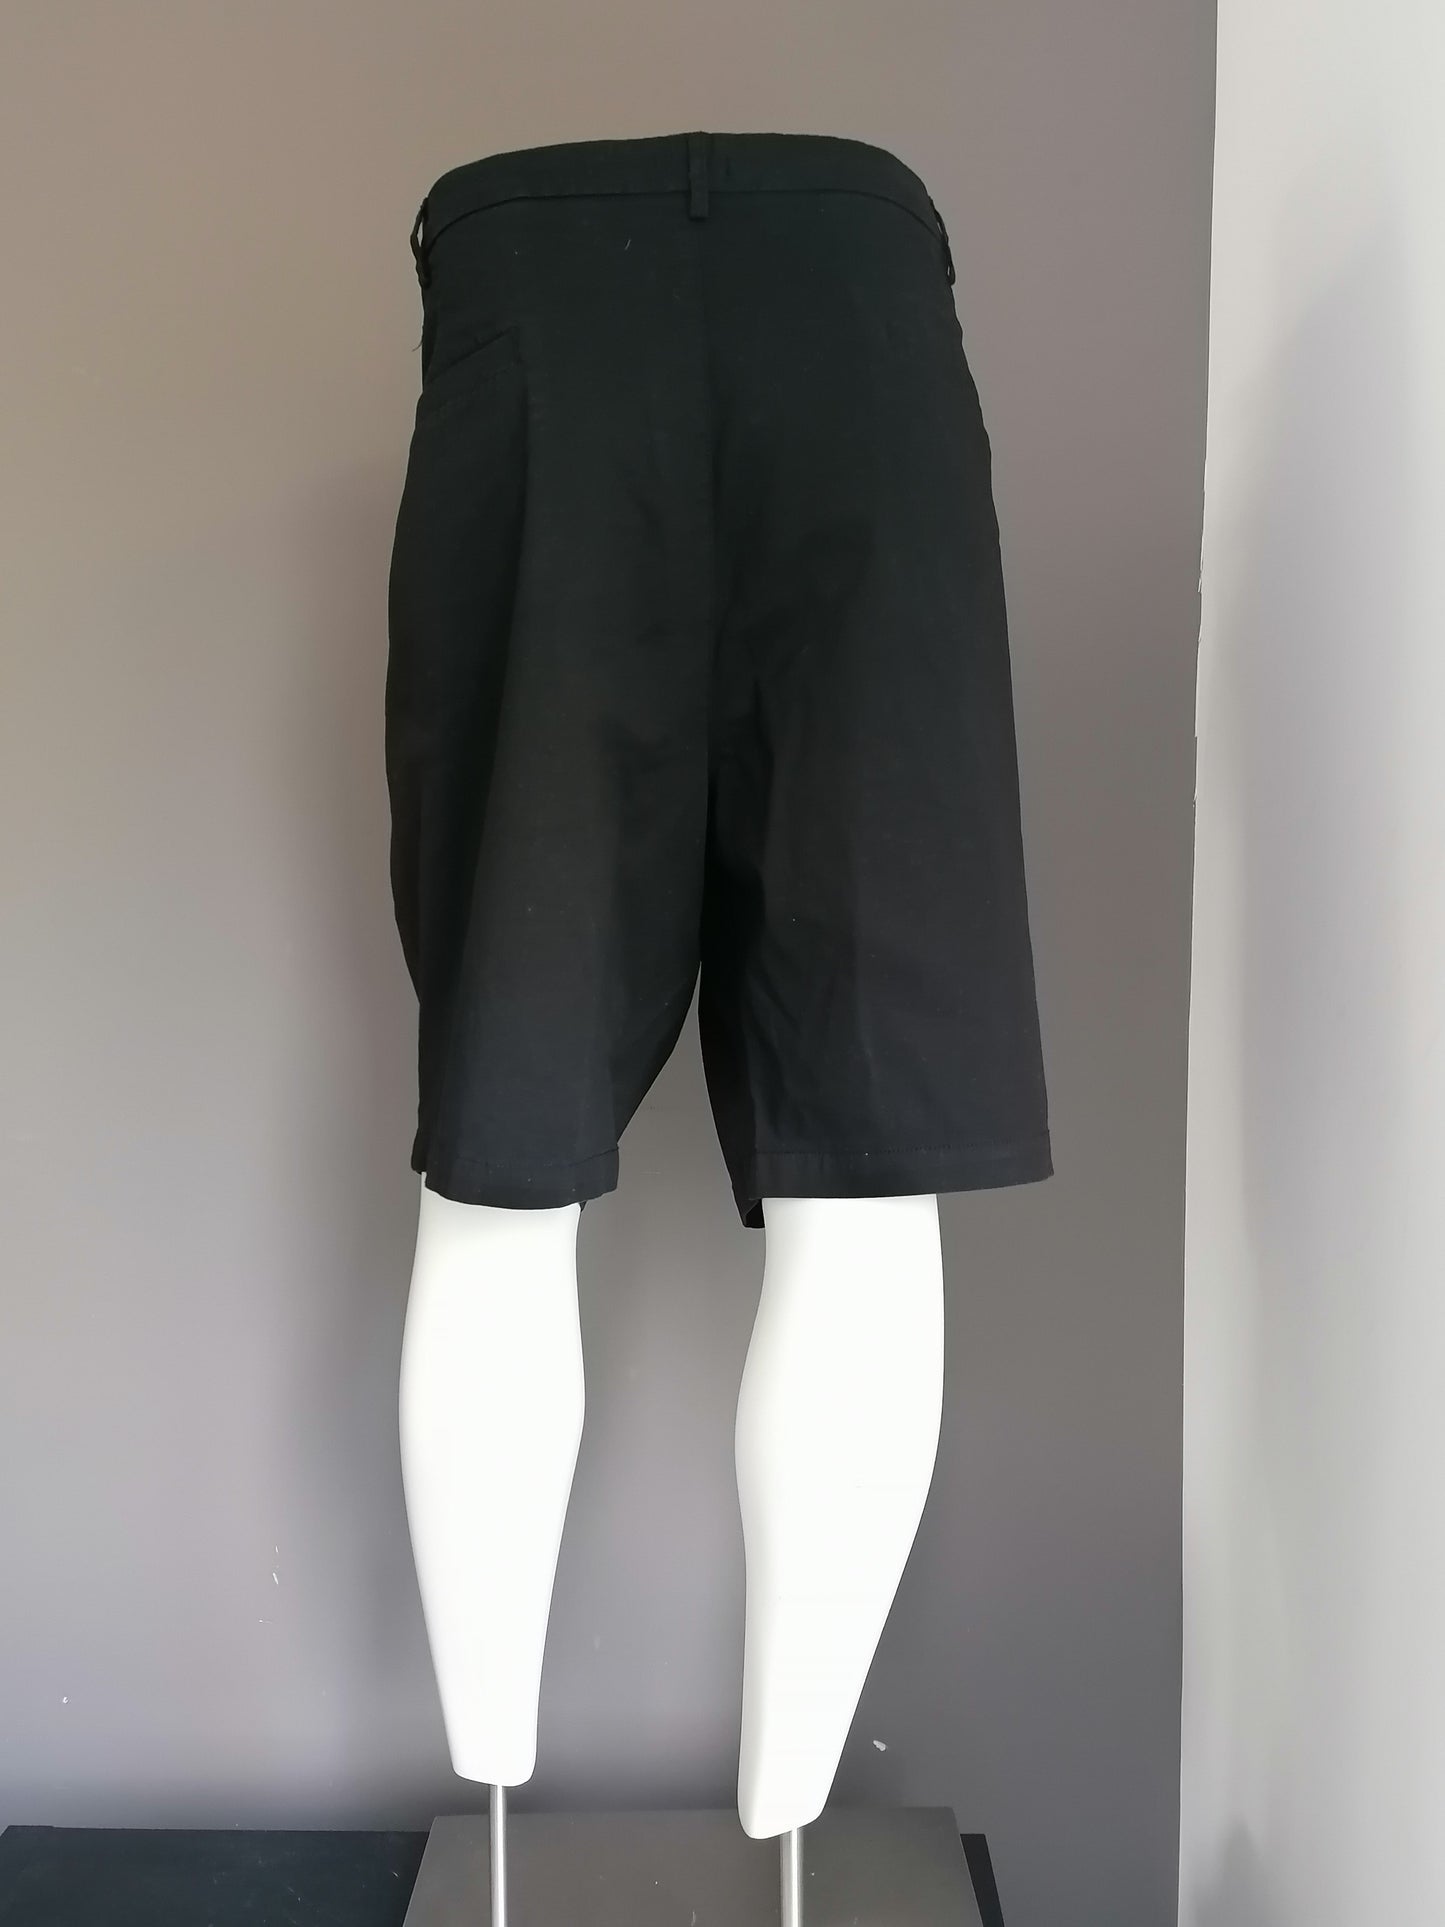 Capsule Men Shorts. Color negro. Tamaño W54. Estirar